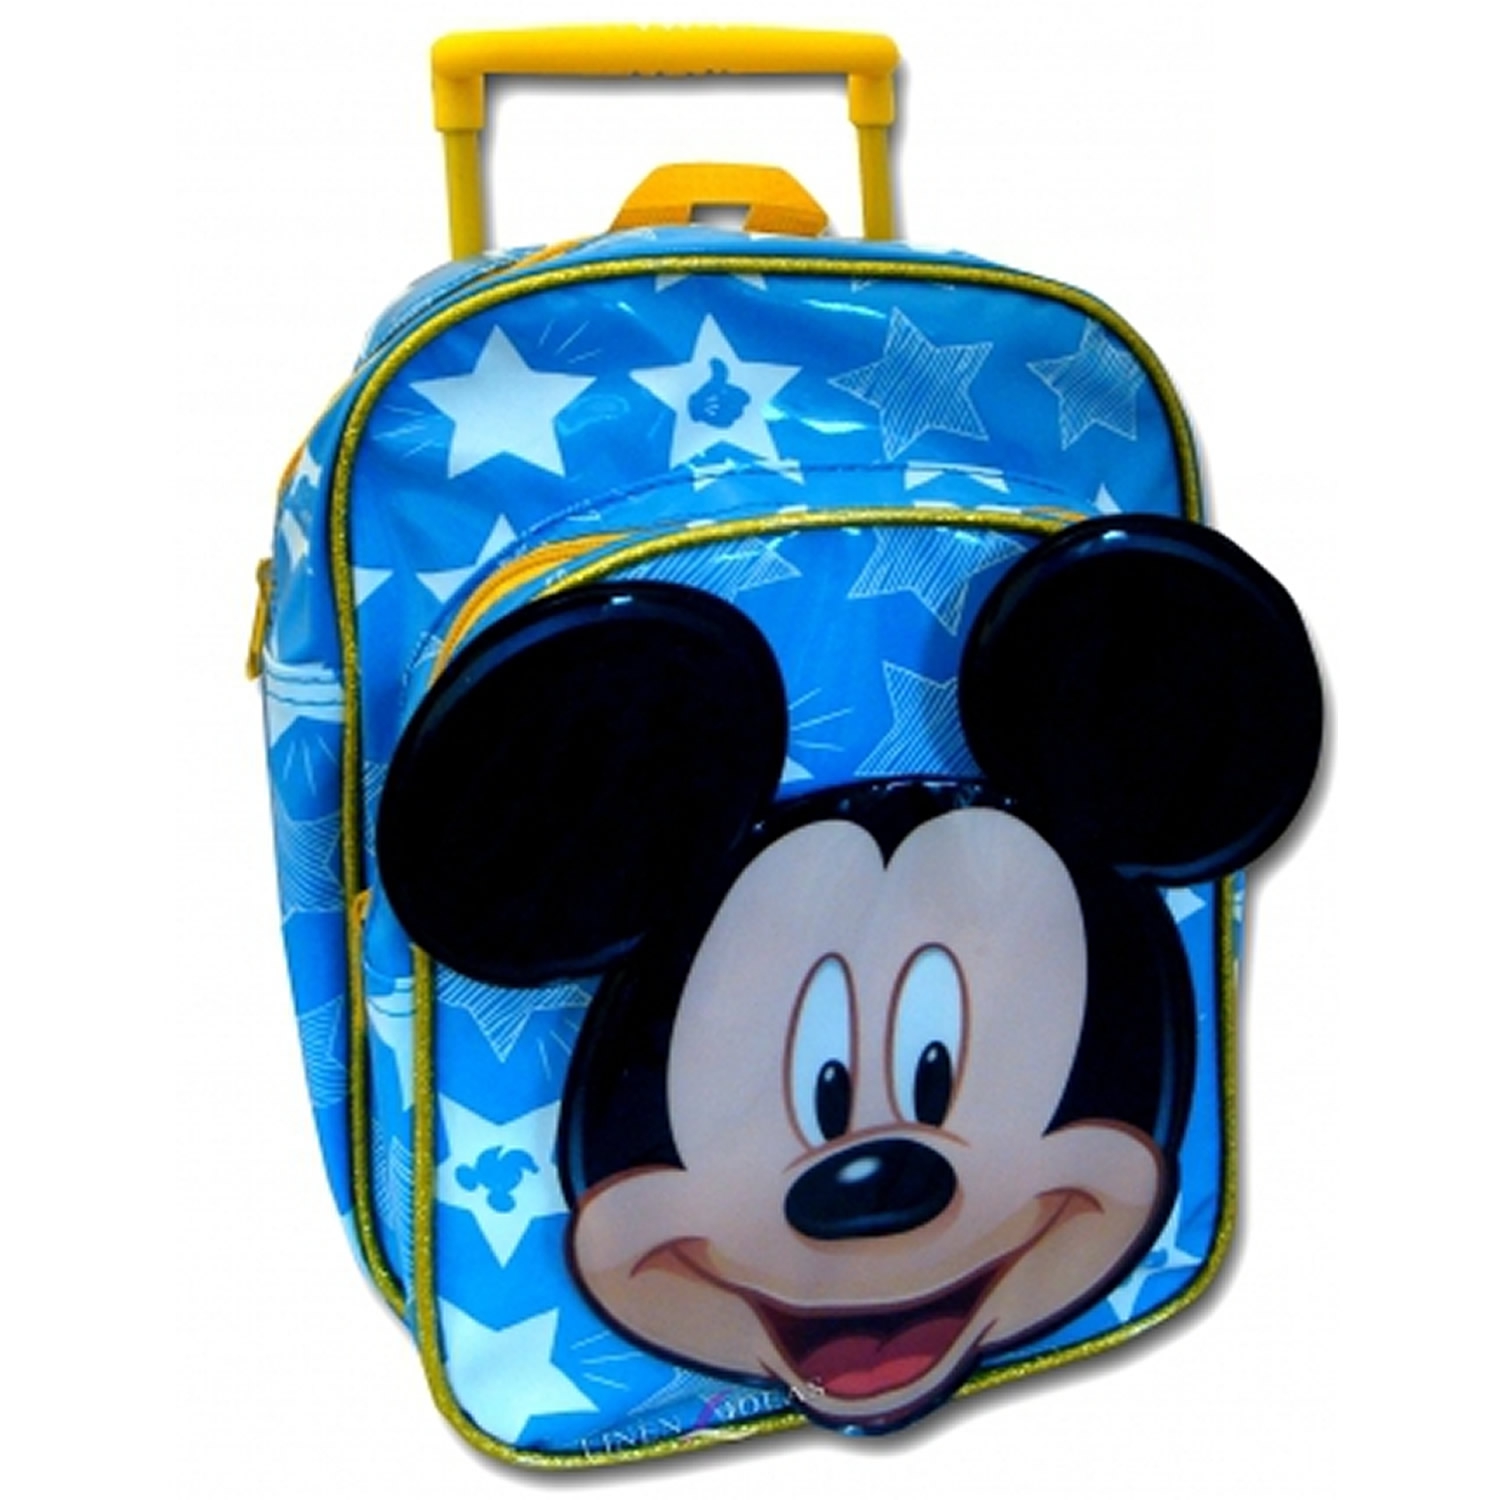 Disney Mickey Mouse 'Mickey' Blue Mini Pvc School Travel Trolley Roller Wheeled Bag